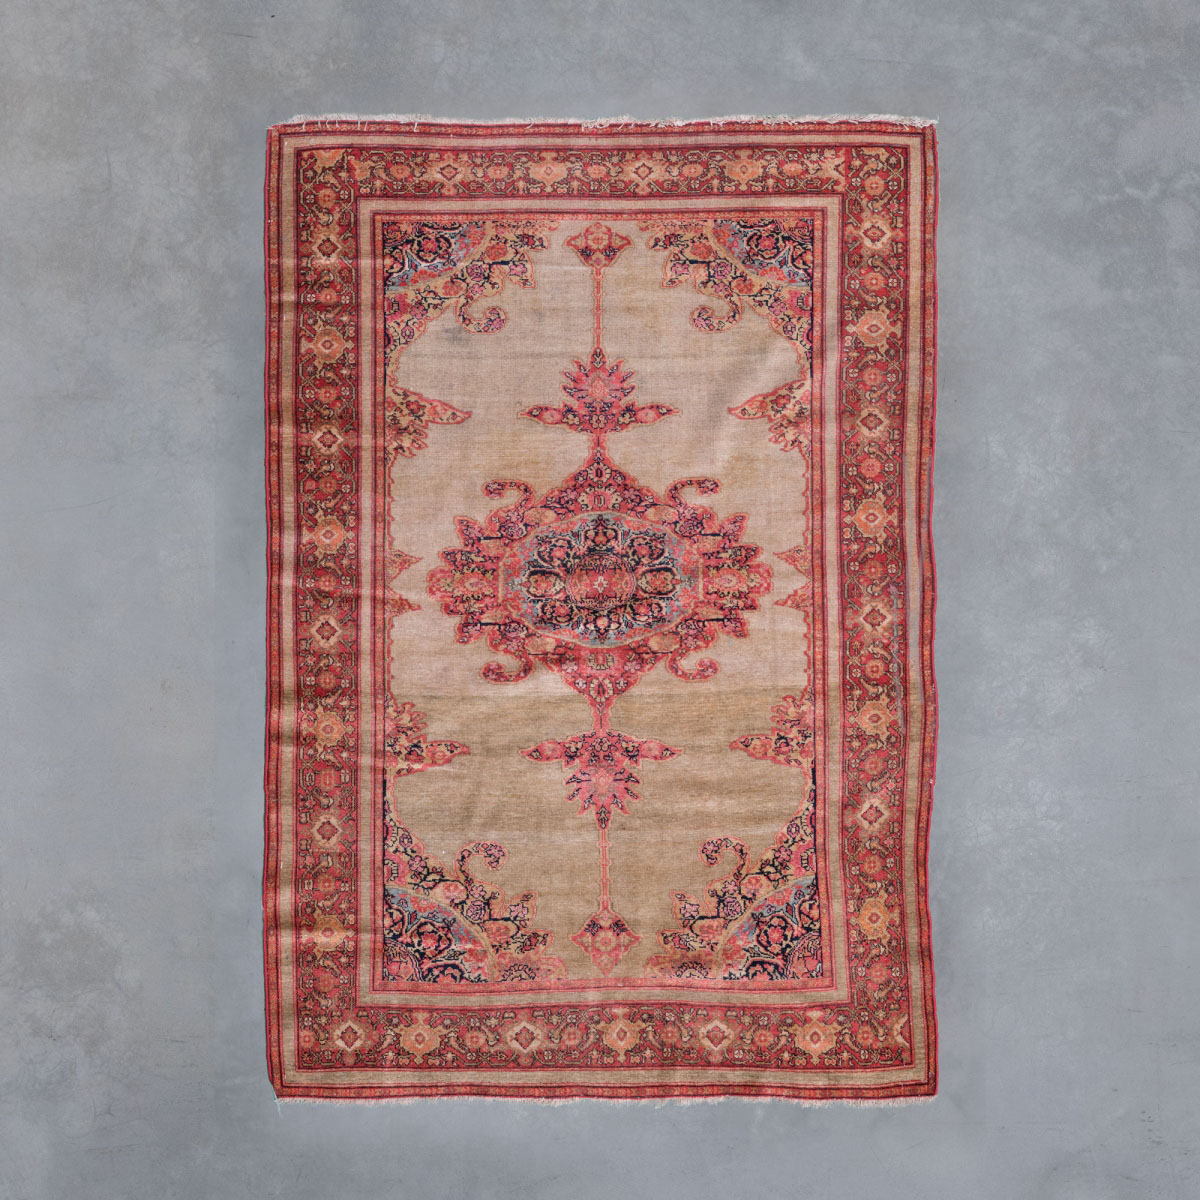 Mayaler carpet | 185 x 130 cm Antique carpets - Persia  pic-1